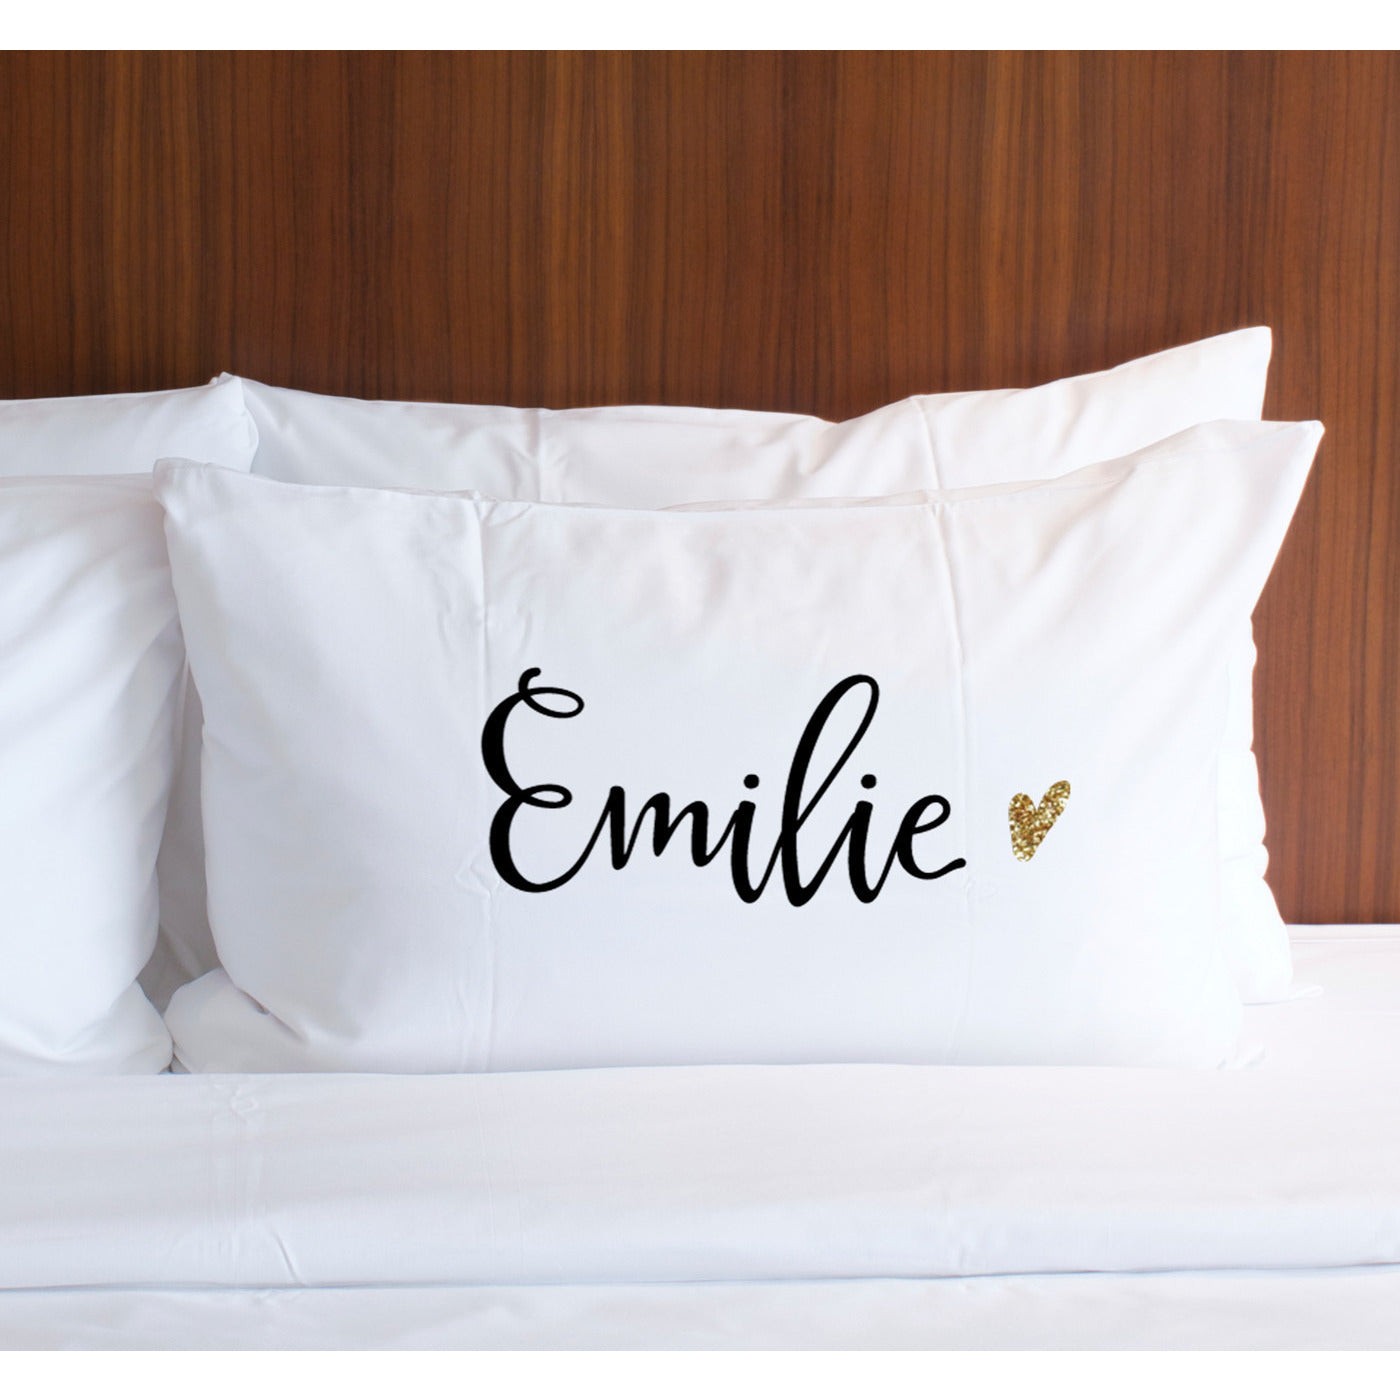 Personalized Name Pillowcases Set